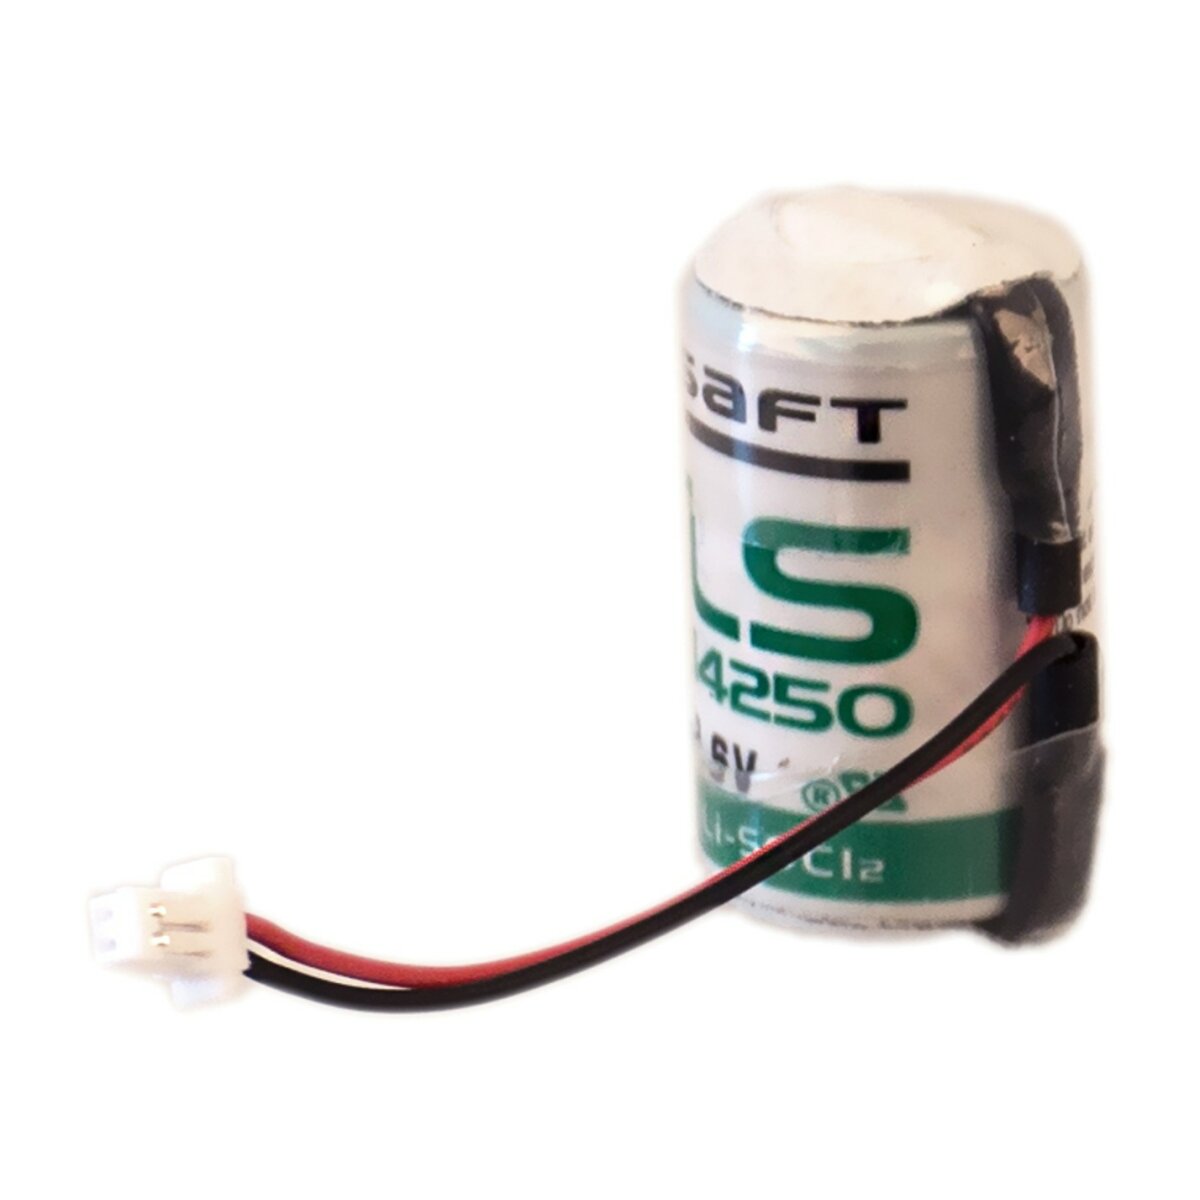 Saft Batterie LS14250 1/2 AA Lithium-Thionylchlorid 3,6 V mit JST Ste